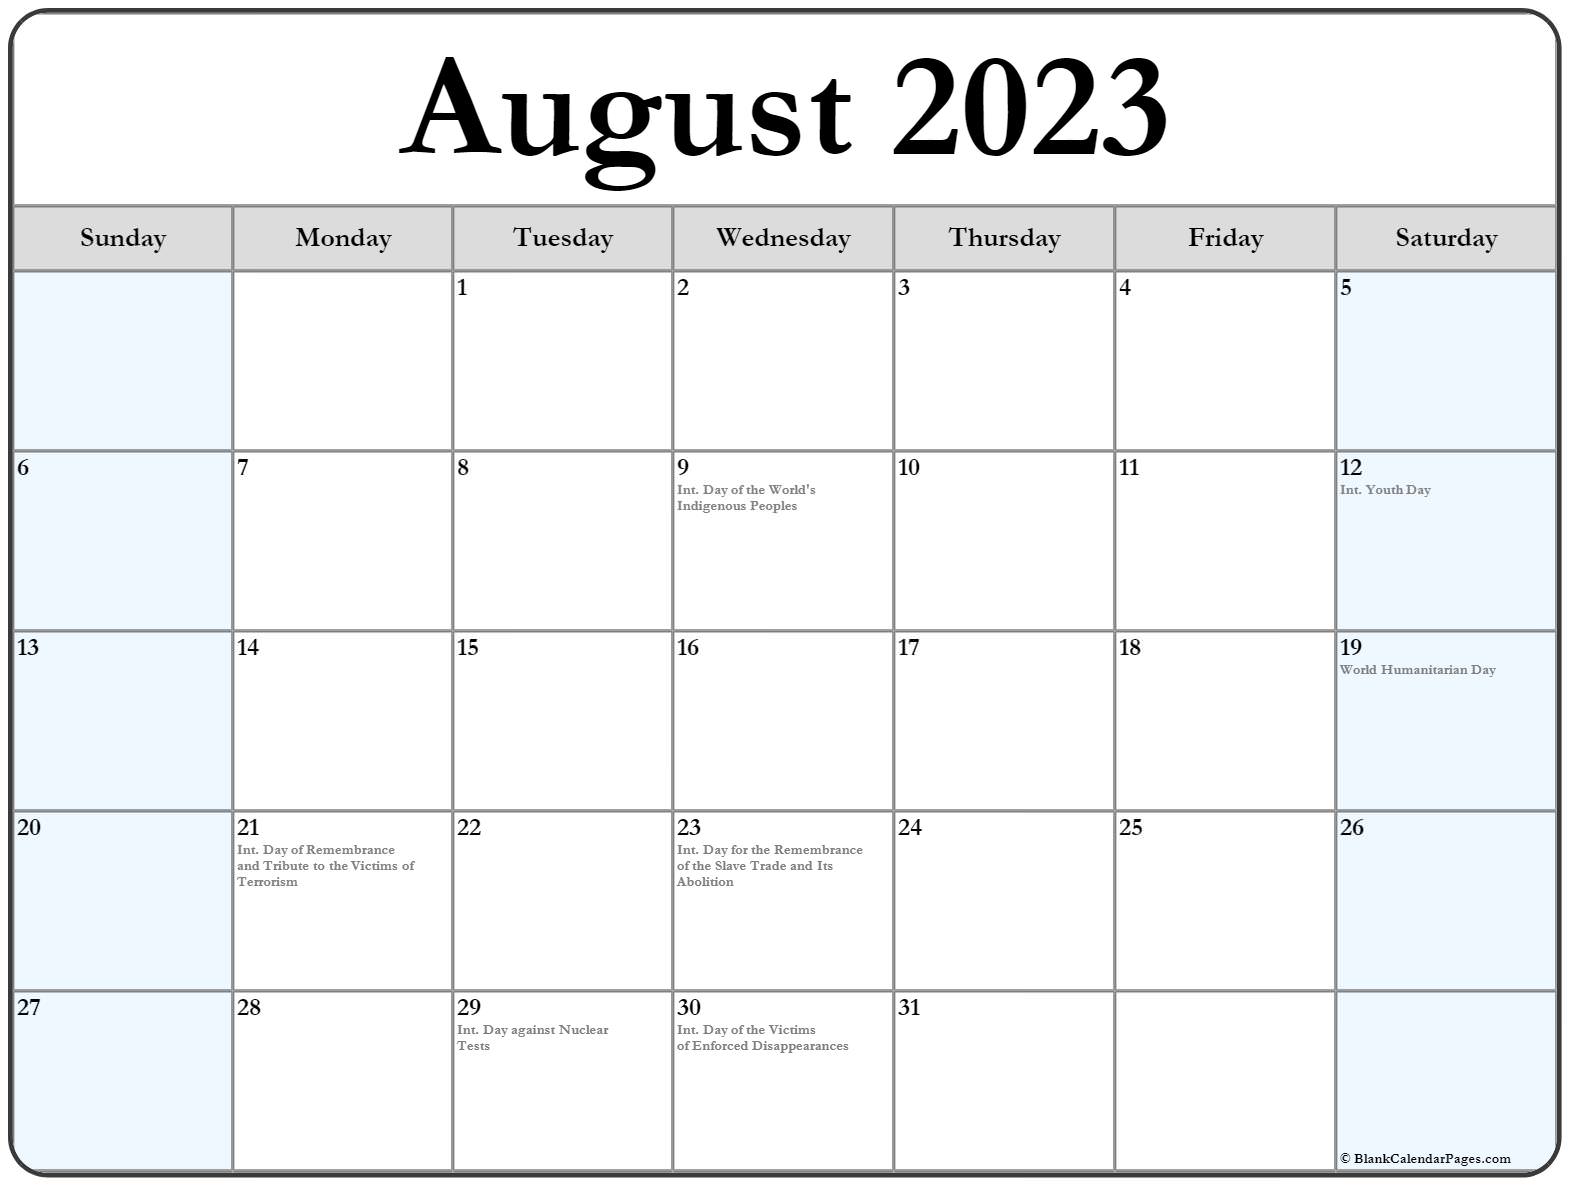 August 2023 Online Printable Calendar August 2023 Calendar Of The 